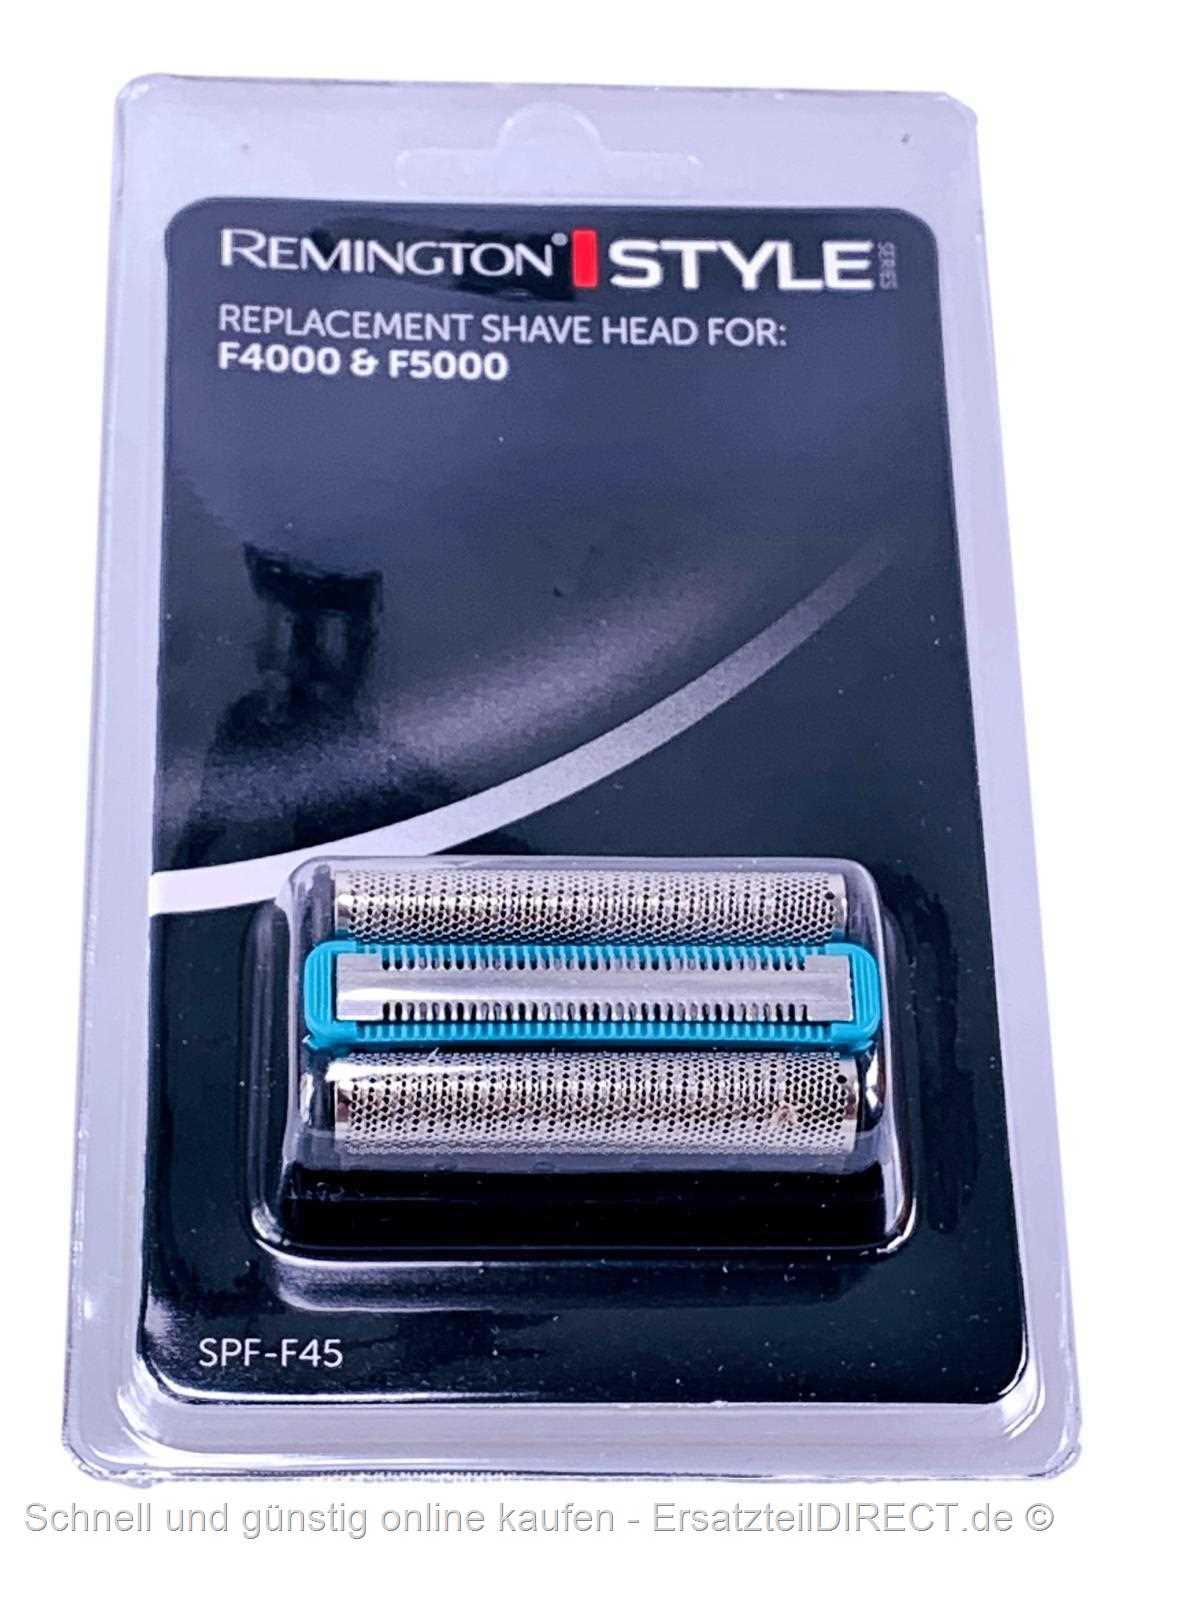 Remington Rasierer Kombipack SPF-F45 günstig SPFF45 F4000 bei kaufen SPF-F45 F5000